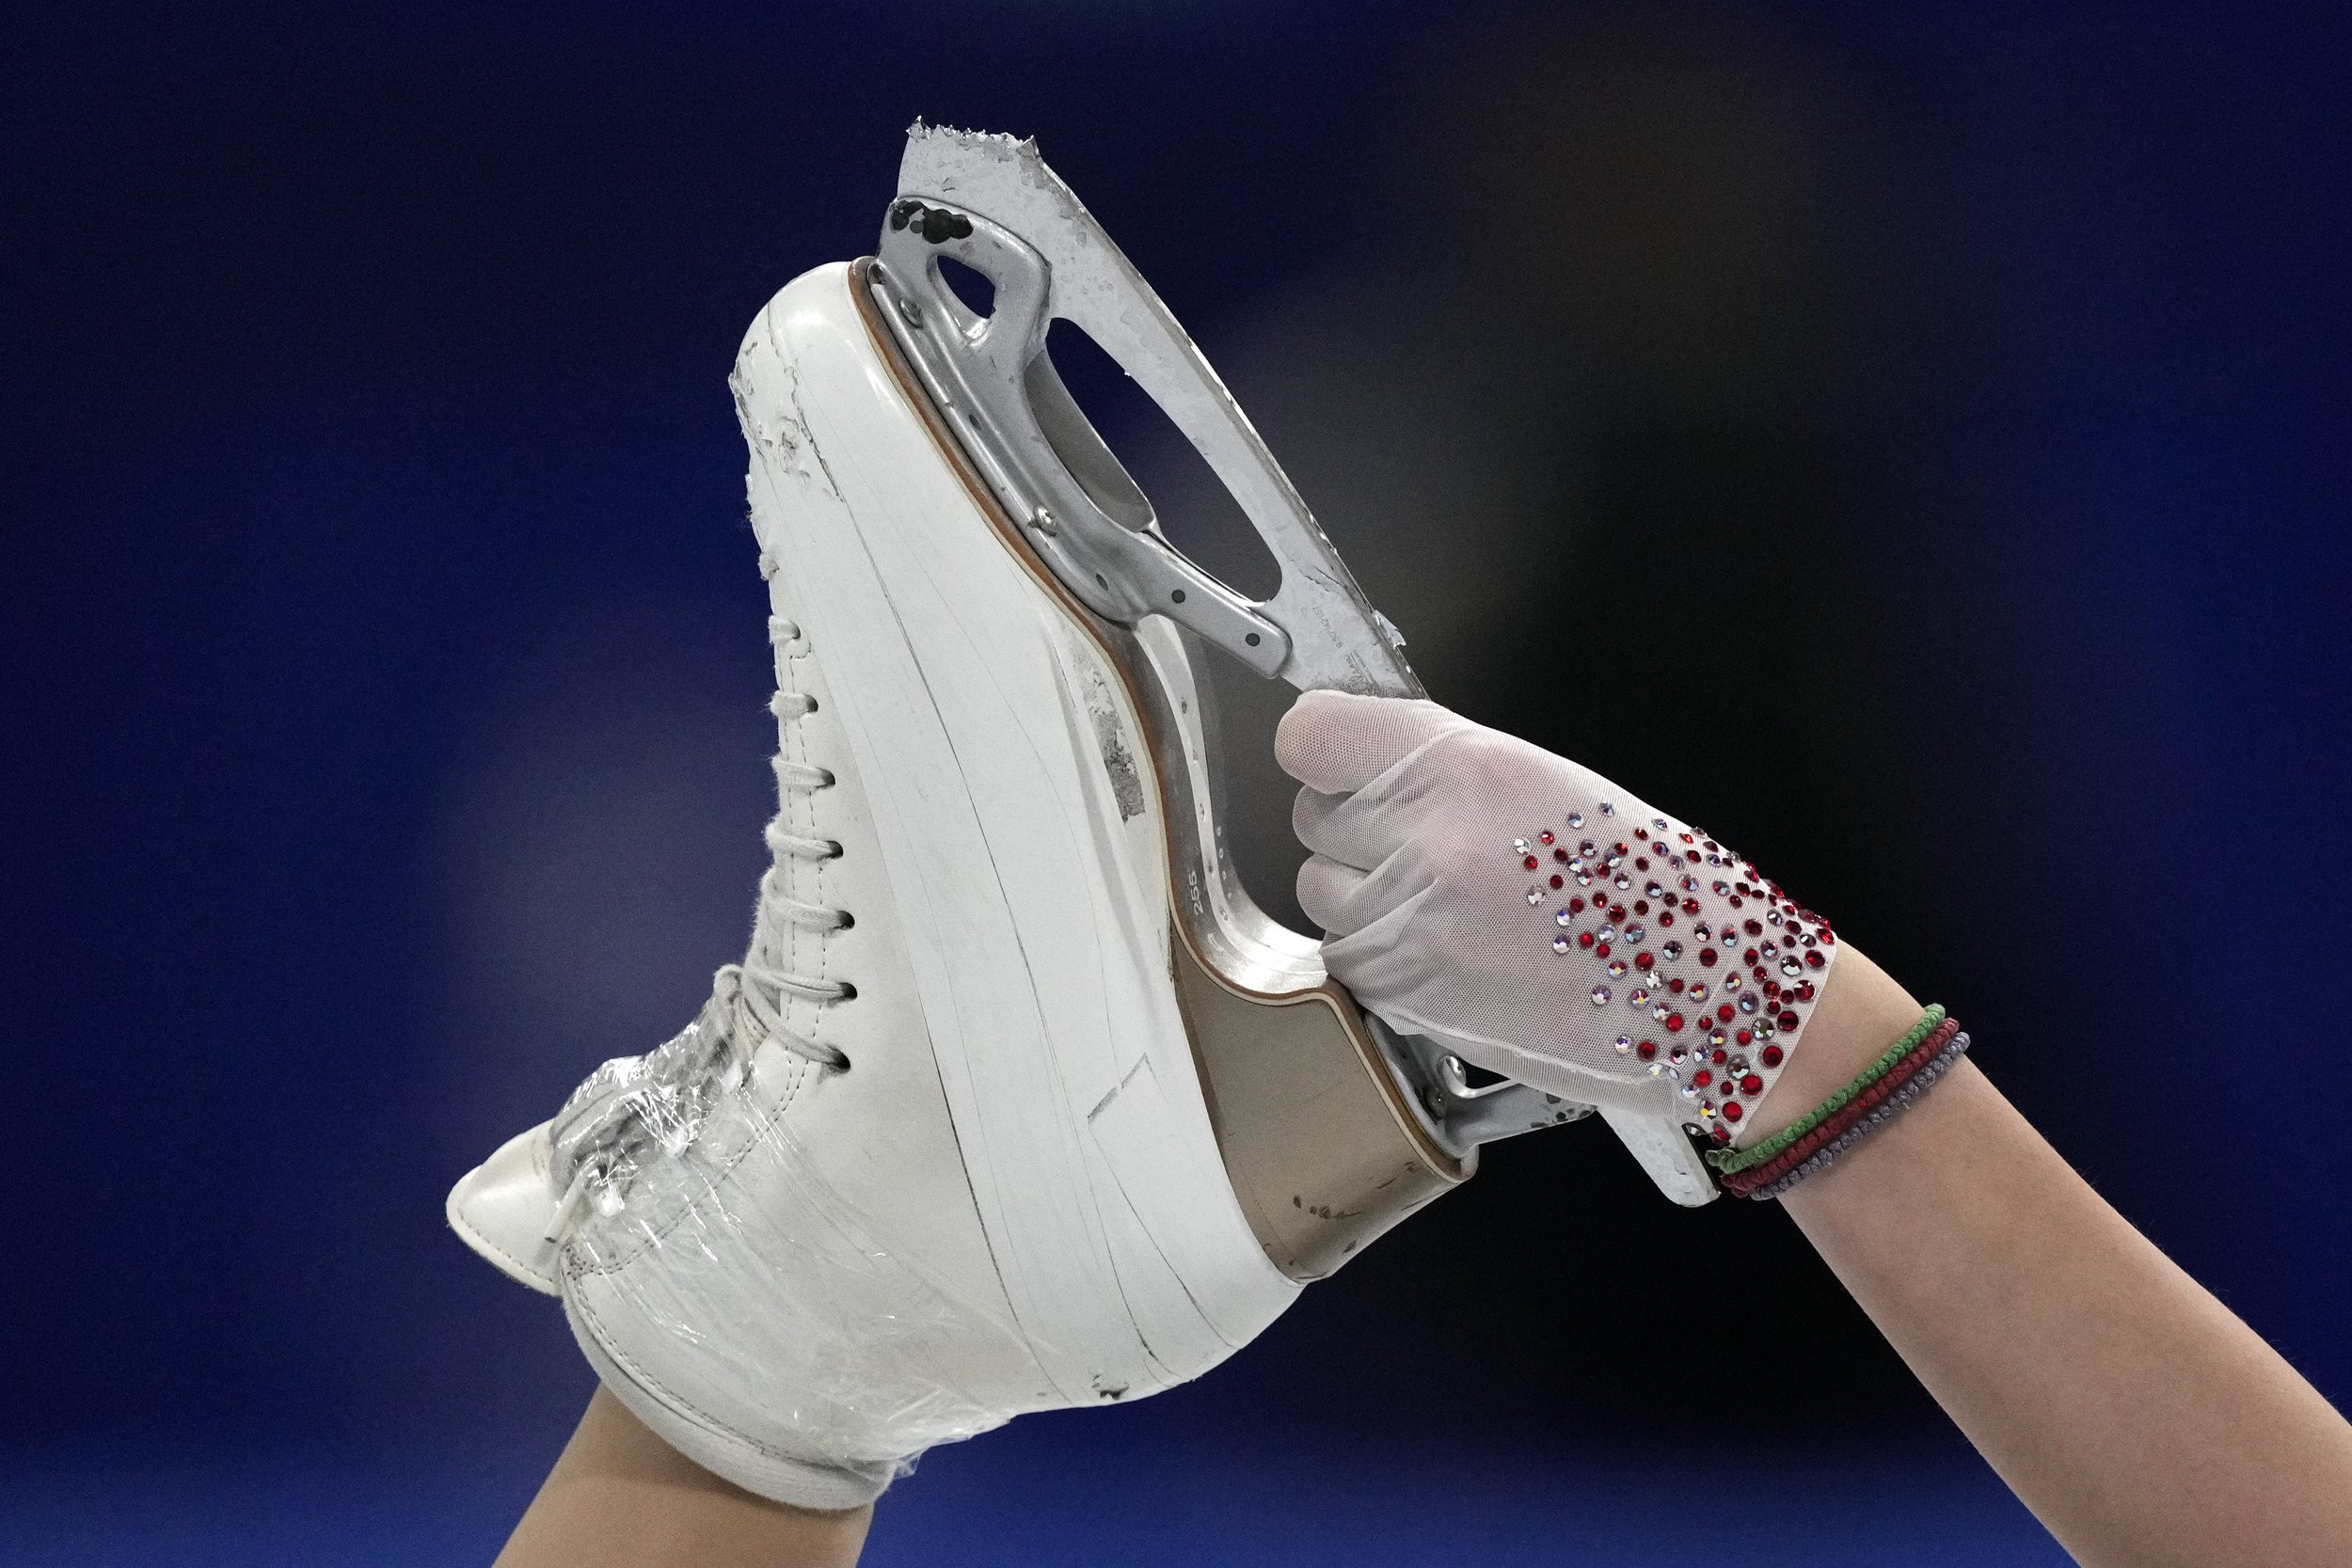  Anastasiia Shabotova, of Ukraine, competes in the women's short program team figure skating competition at the 2022 Winter Olympics, Sunday, Feb. 6, 2022, in Beijing. (AP Photo/Bernat Armangue) 